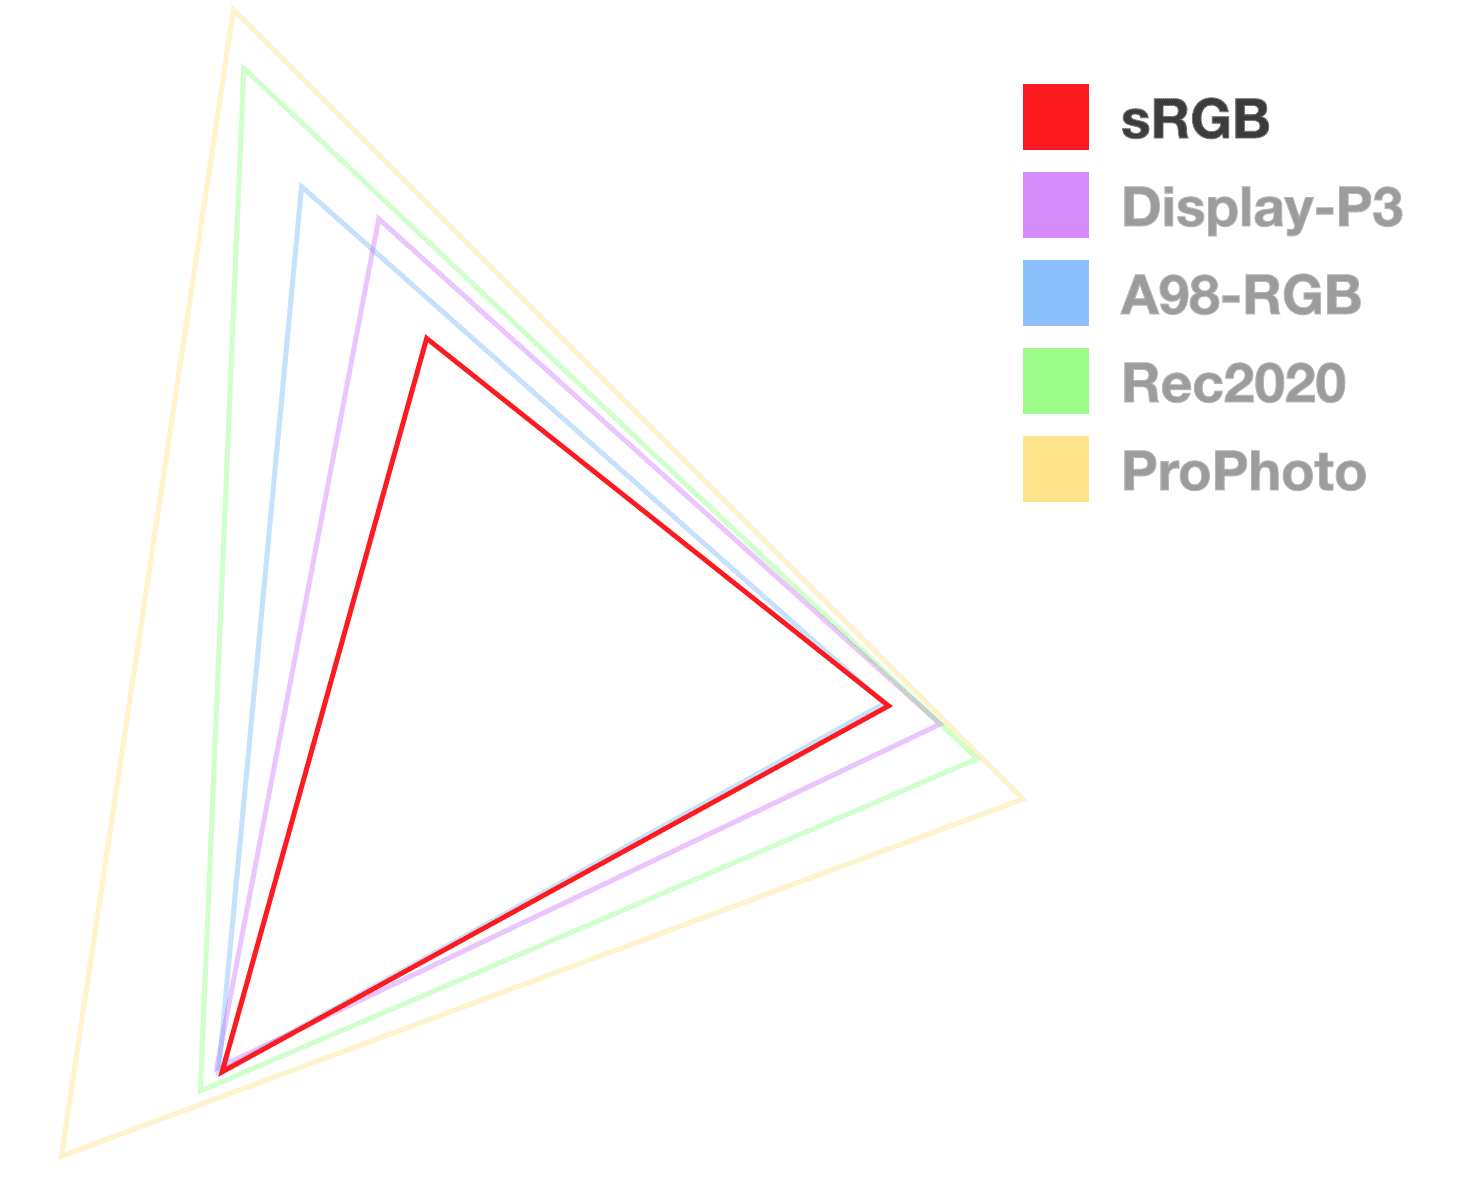 Segitiga sRGB adalah satu-satunya satu-satunya yang sepenuhnya buram, untuk membantu memvisualisasikan ukuran gamut.